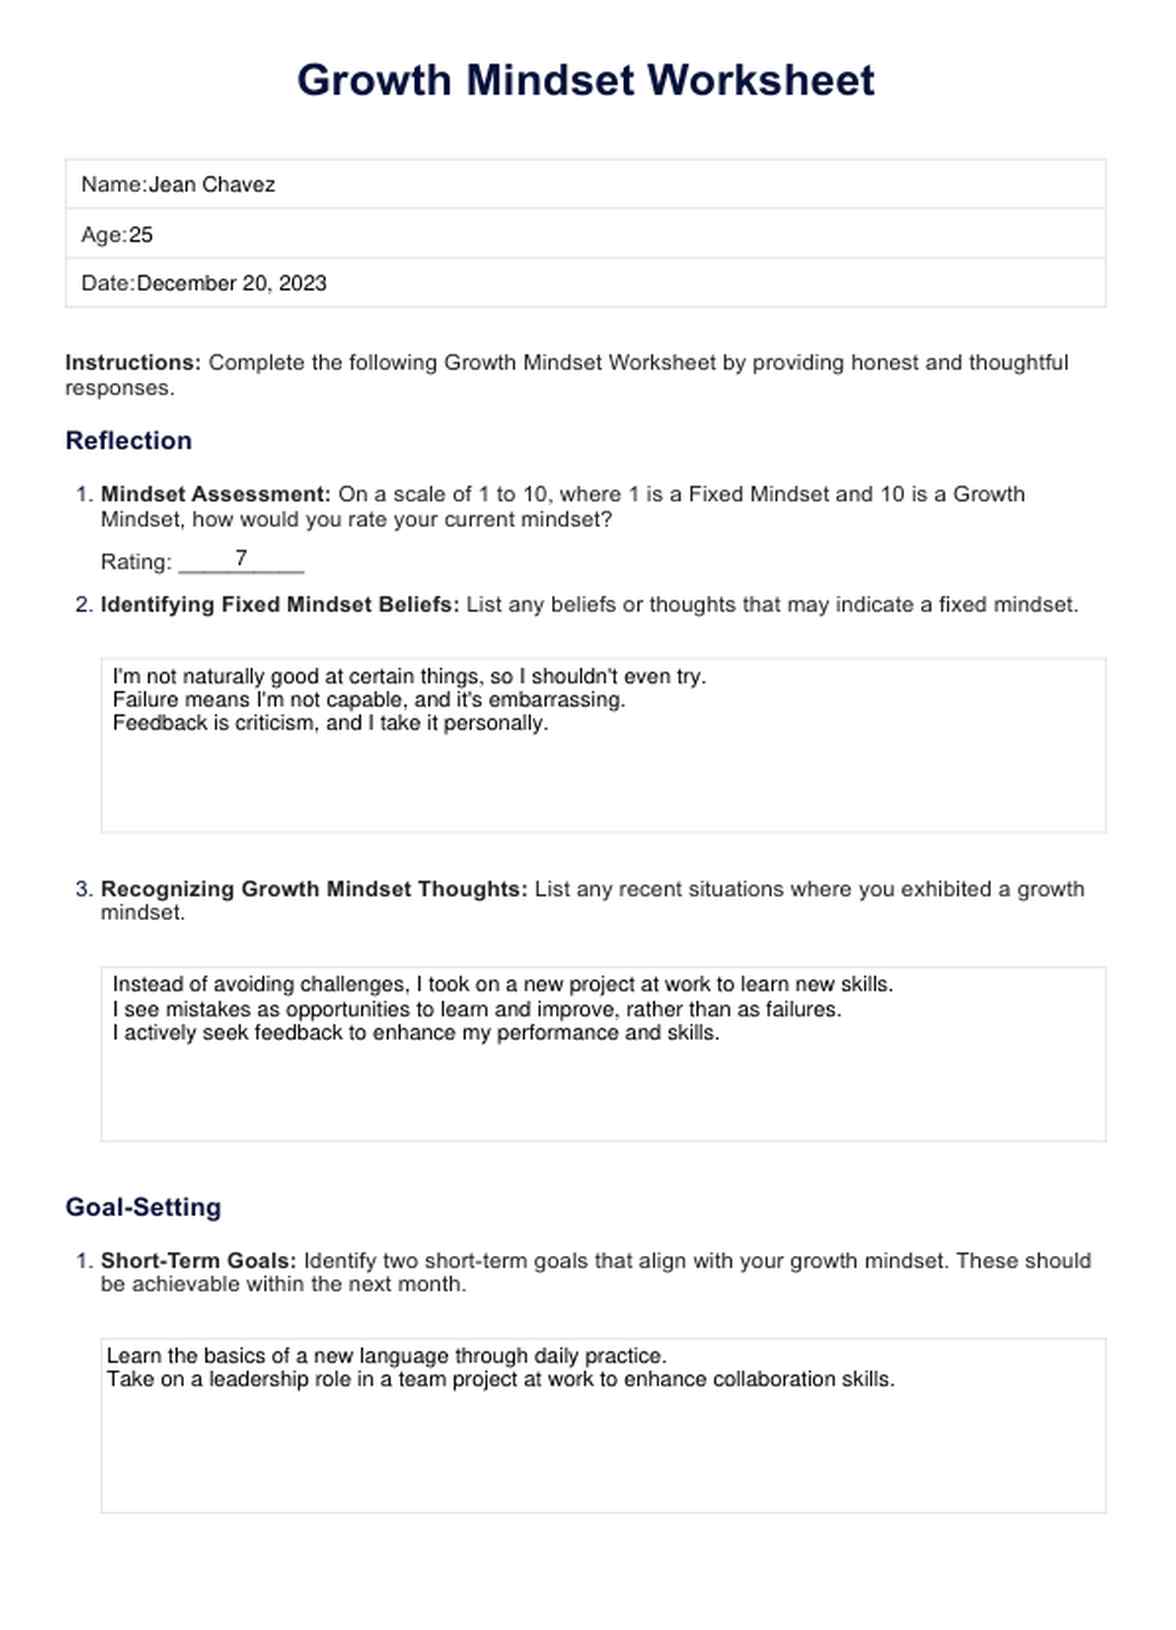 Growth Mindset Worksheet PDF Example